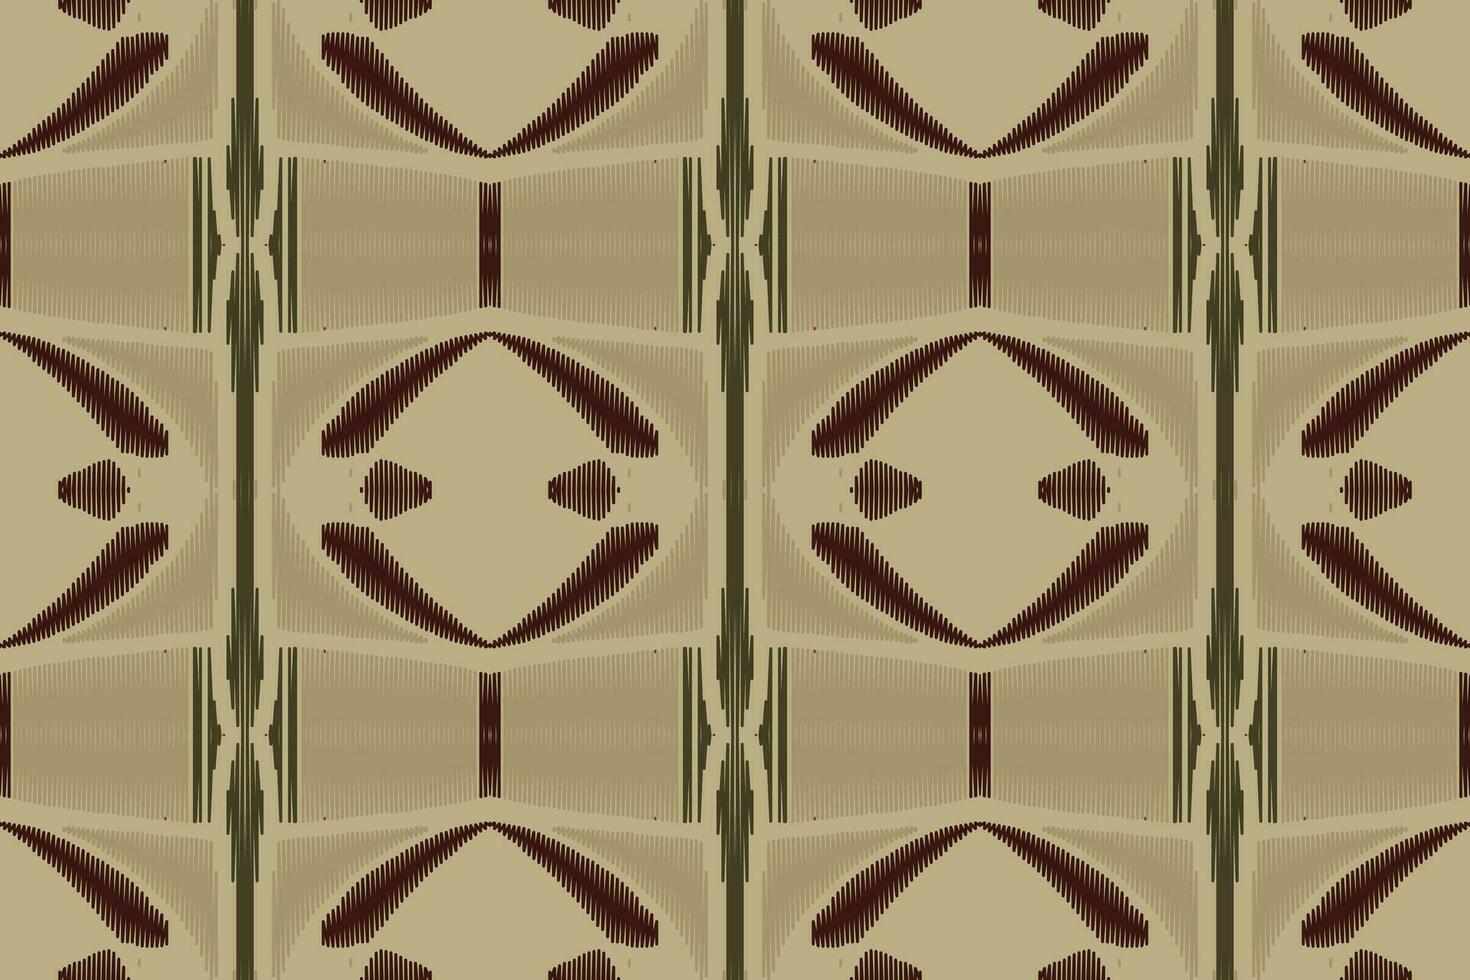 motivo ikat cachemir bordado antecedentes. ikat huellas dactilares geométrico étnico oriental modelo tradicional. ikat azteca estilo resumen diseño para impresión textura,tela,sari,sari,alfombra. vector